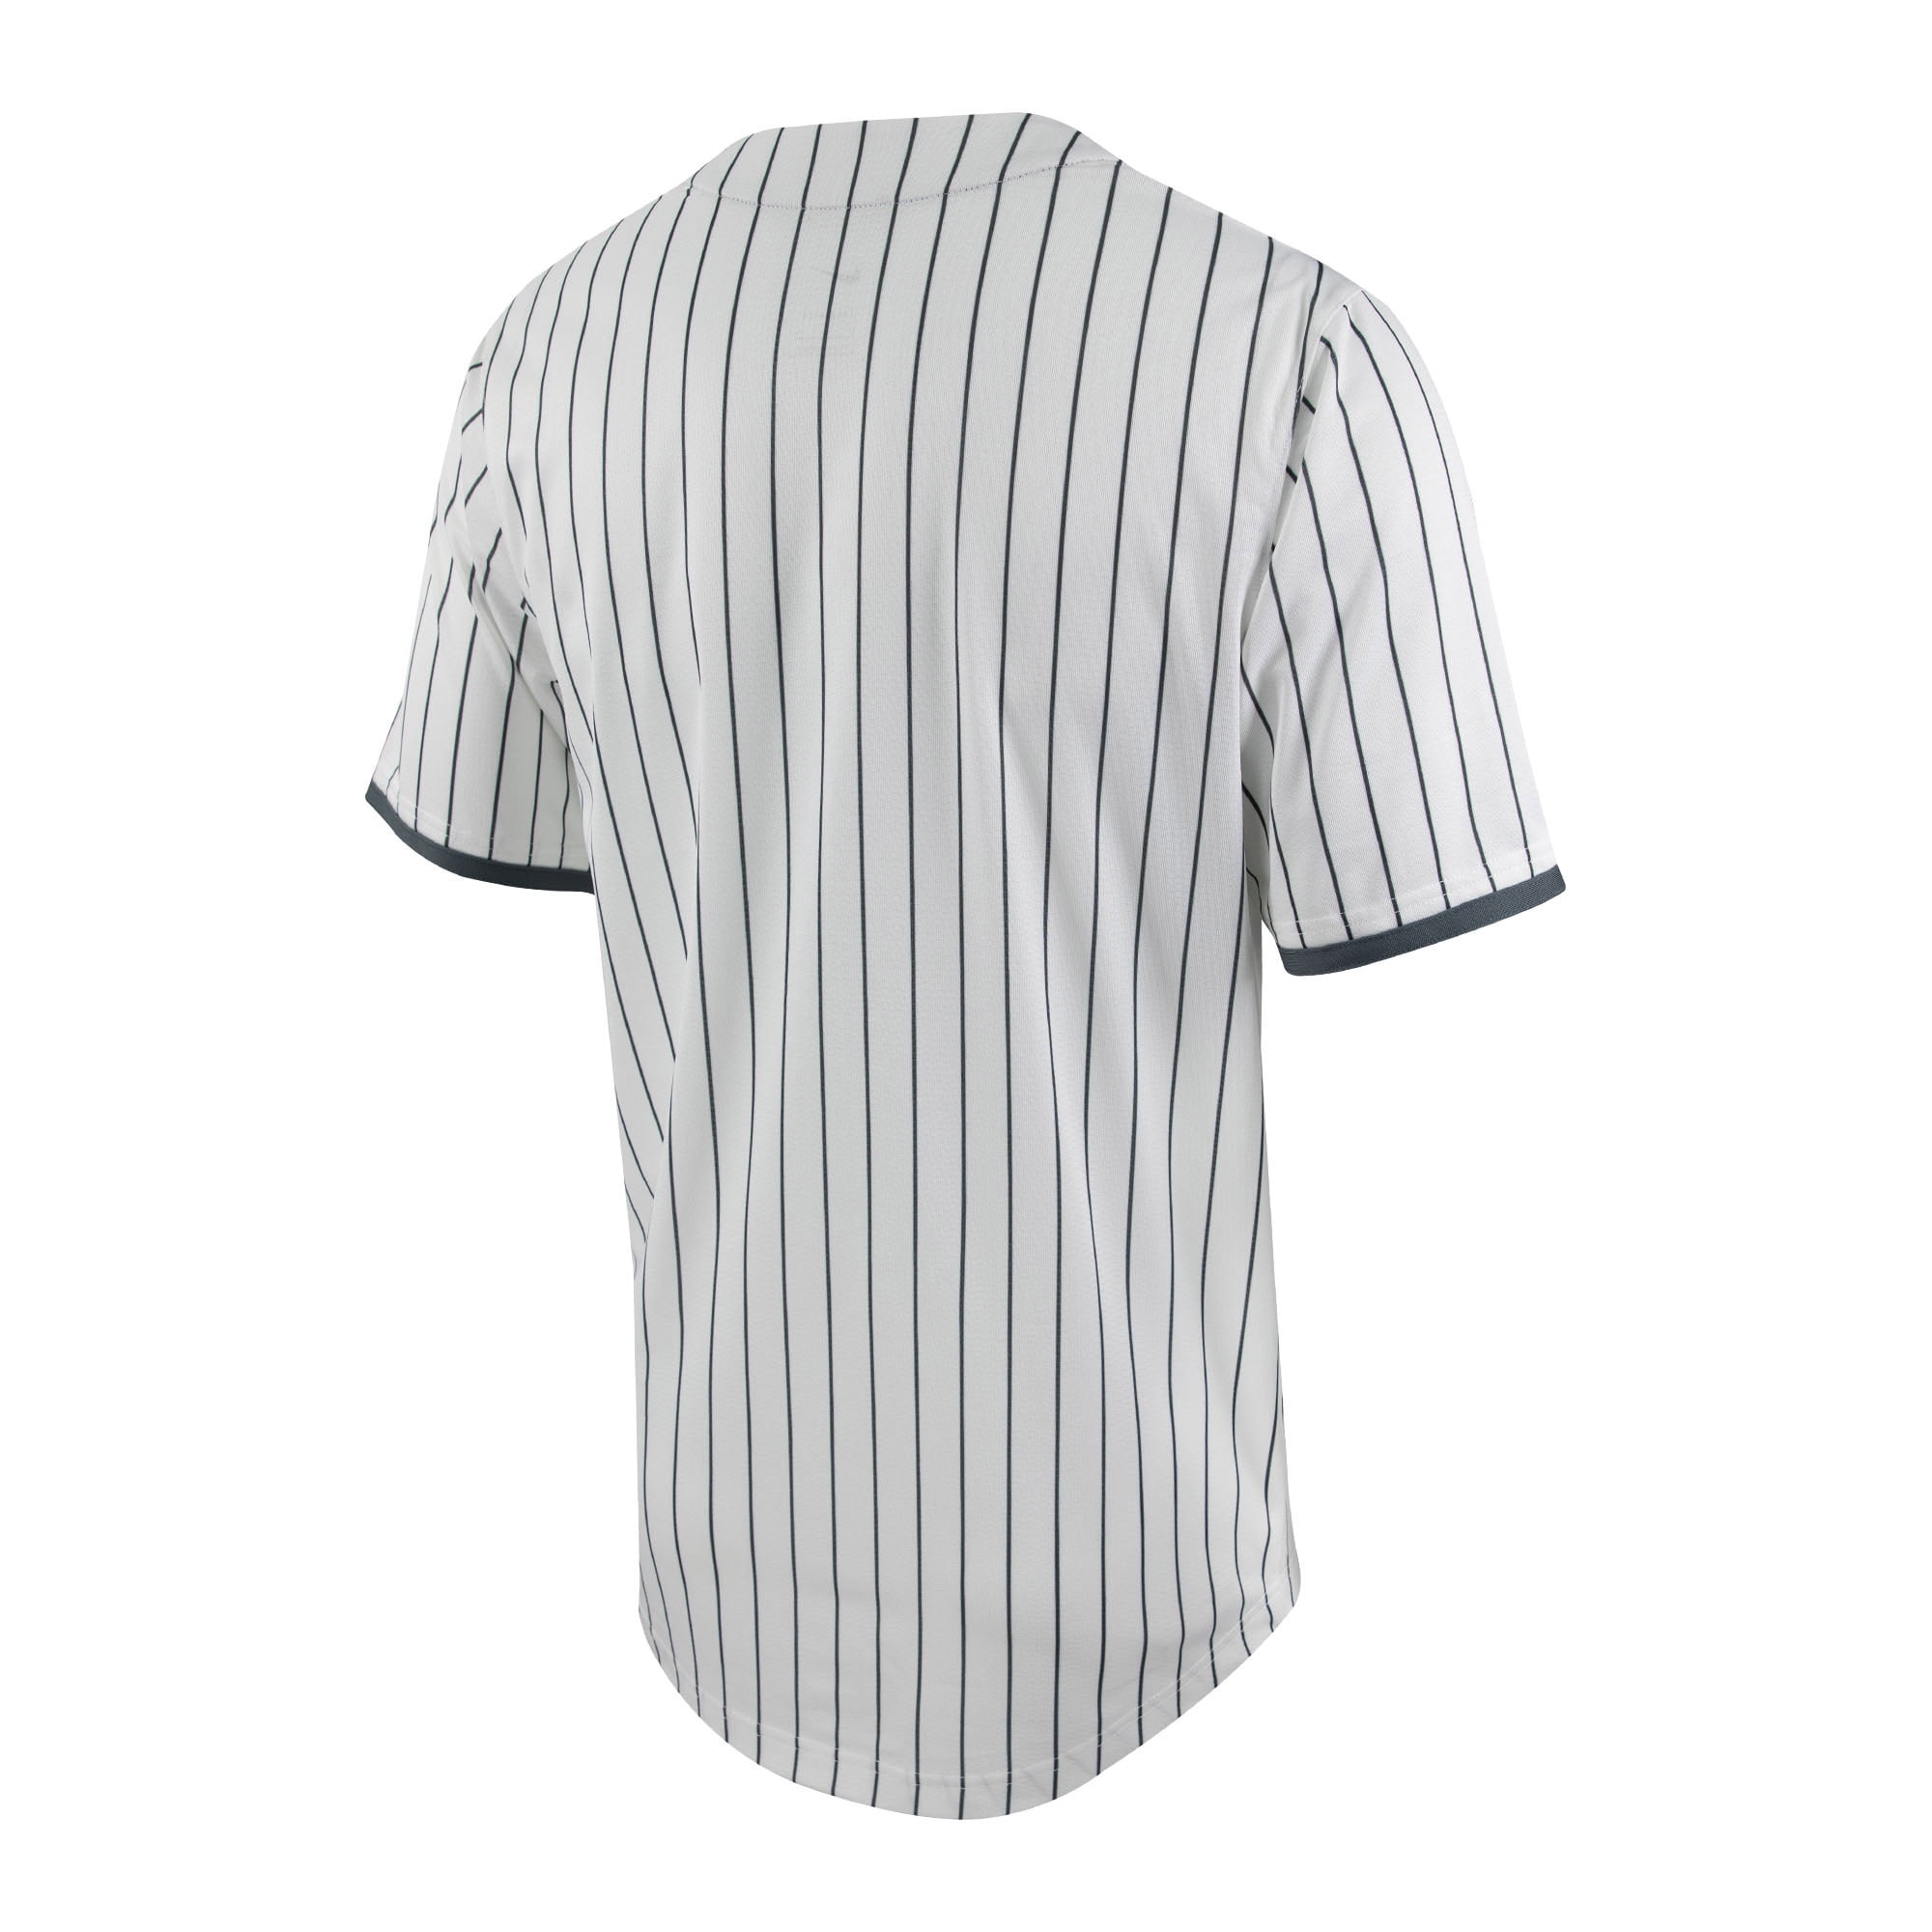 tennessee grey baseball jersey